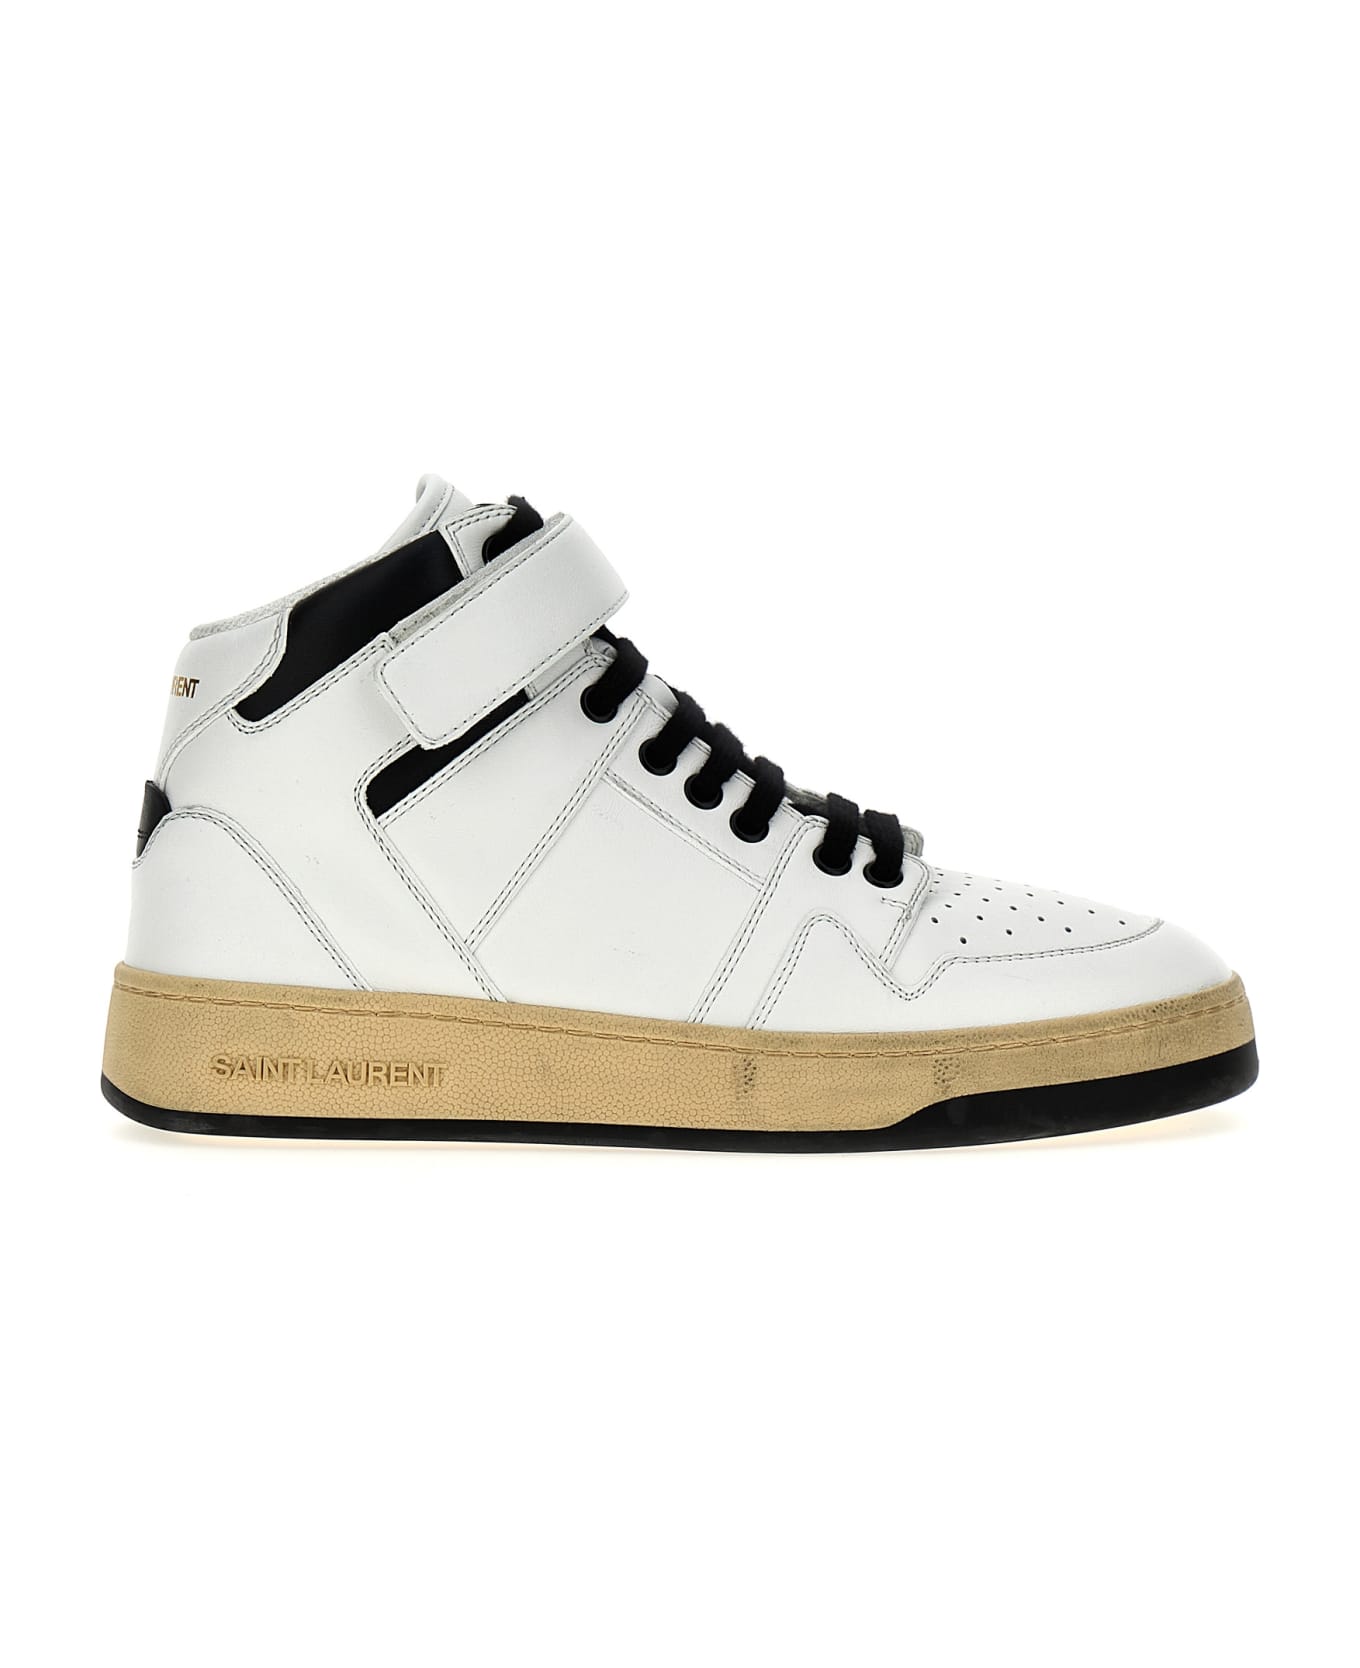 Saint Laurent 'lax' Sneakers - White/Black